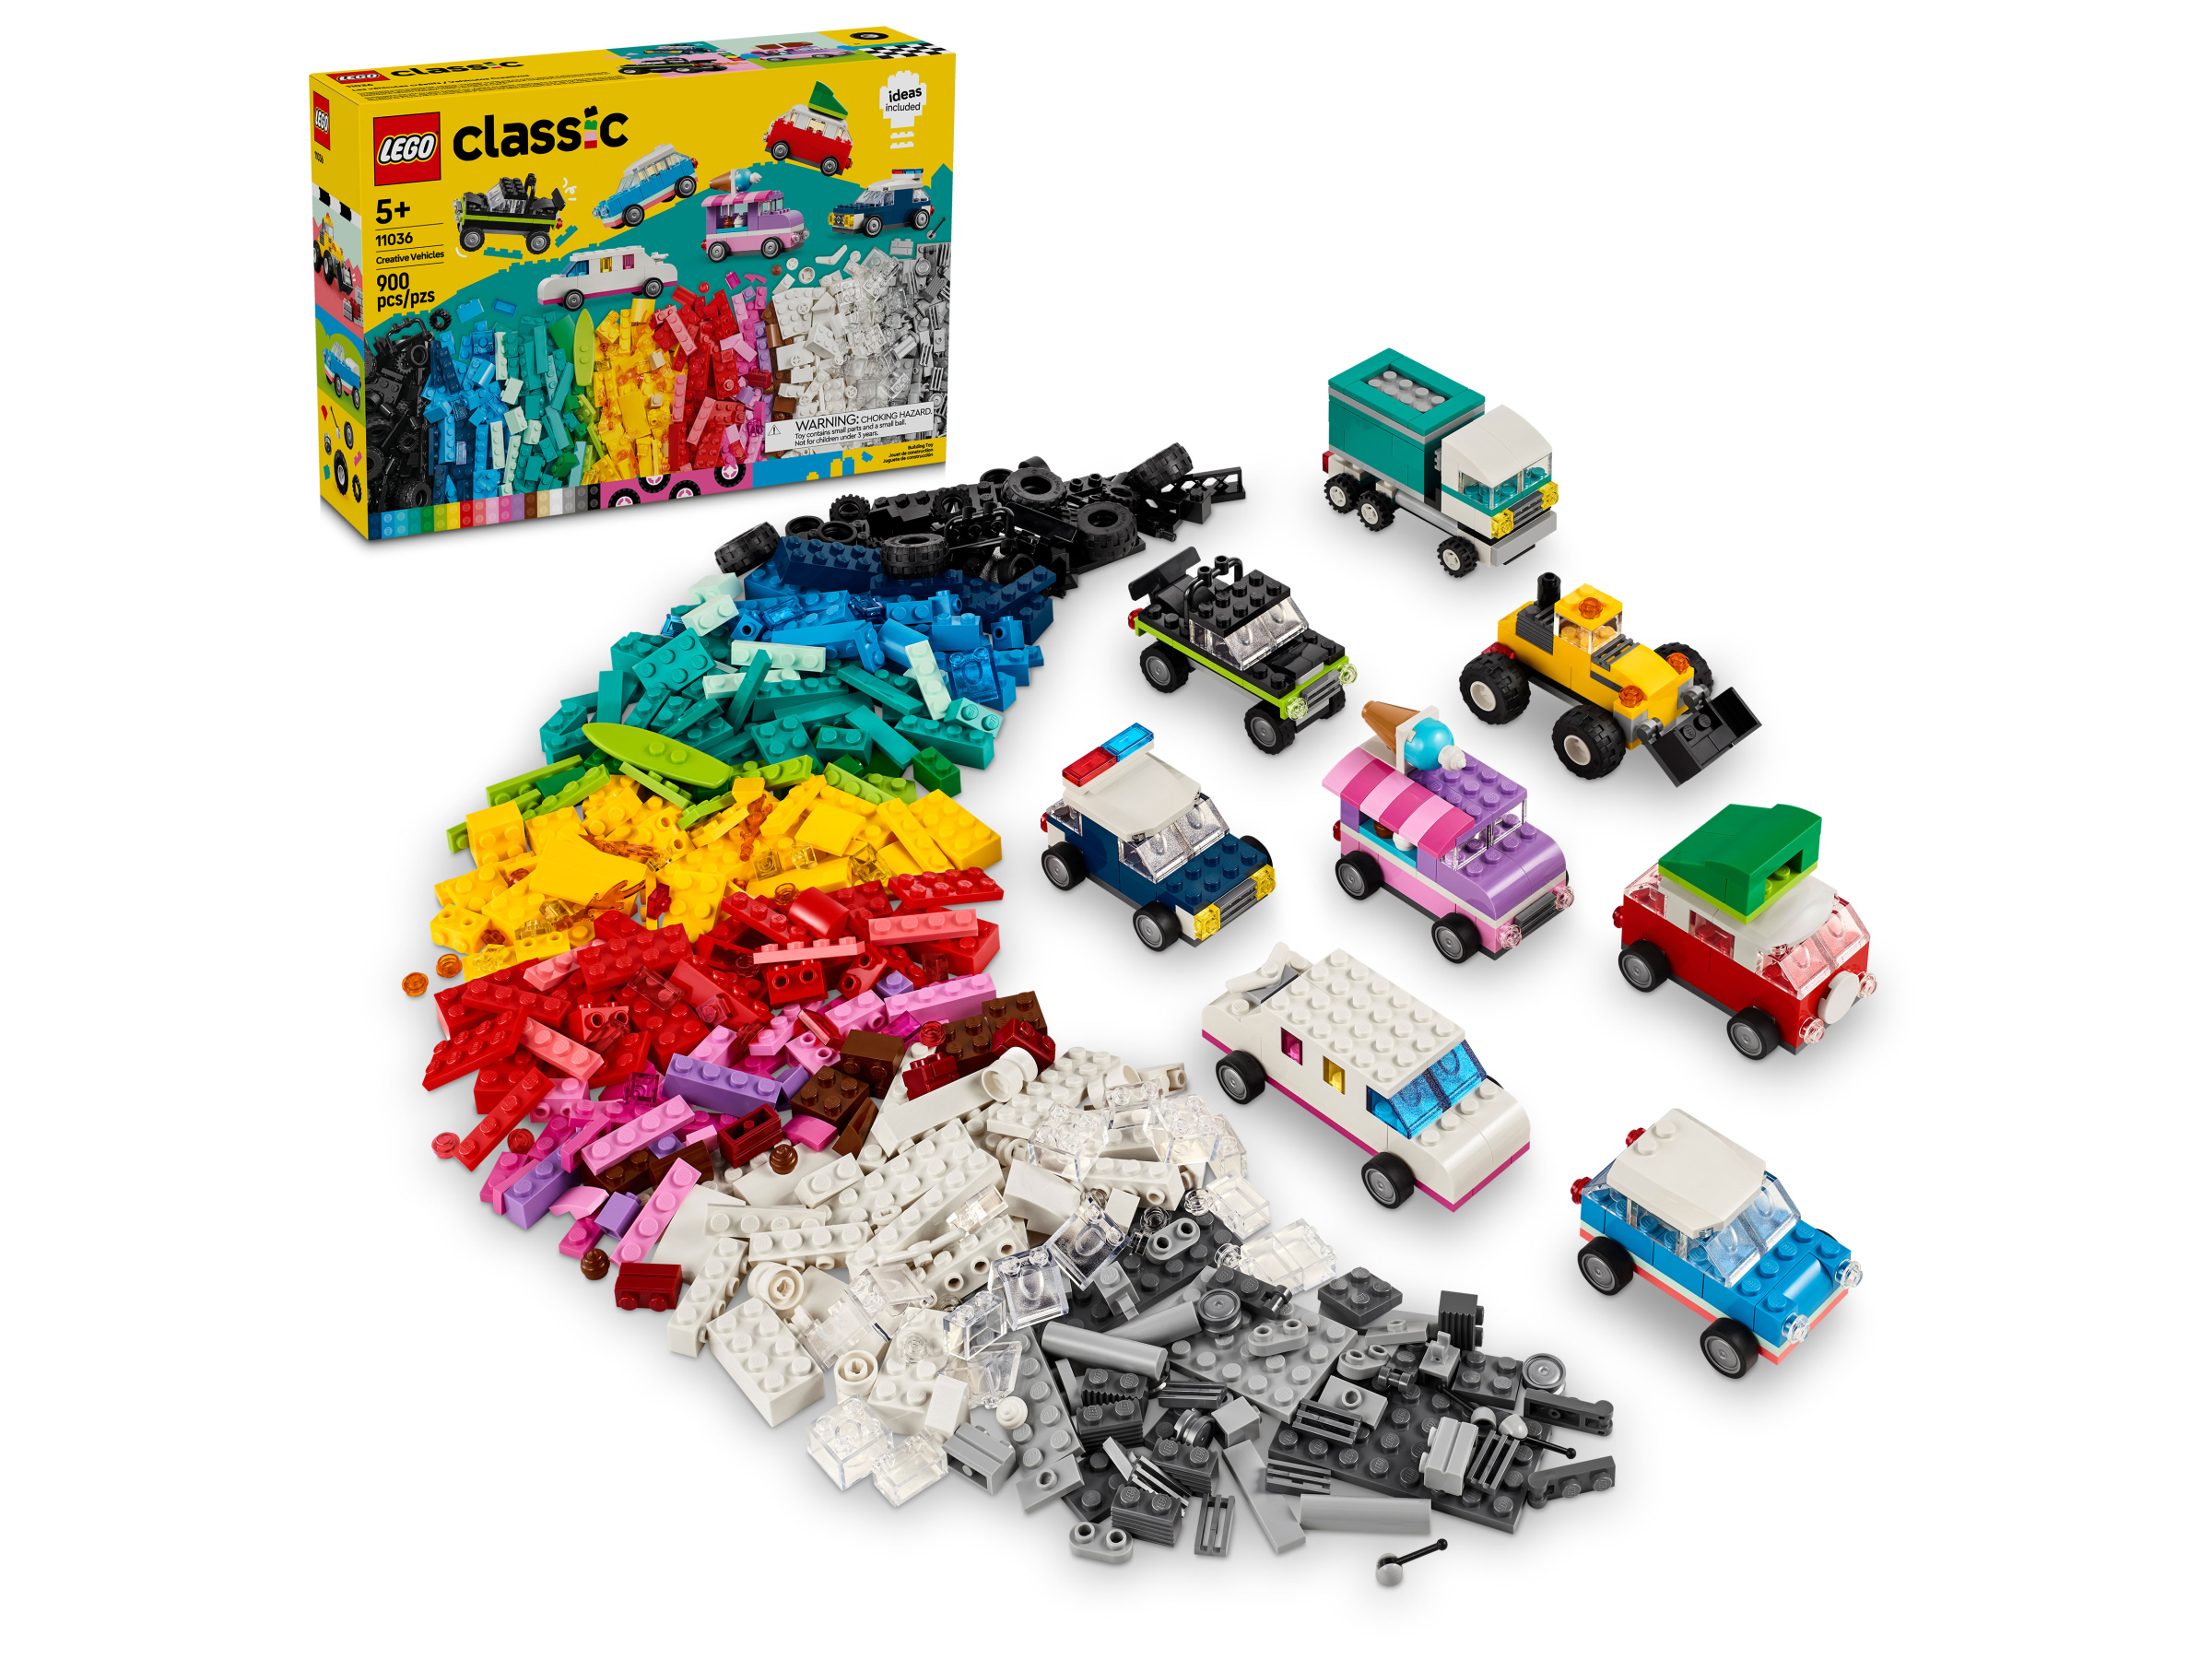 COCHES CLÁSICOS LEGO  Los cinco mejores coches clásicos de Lego